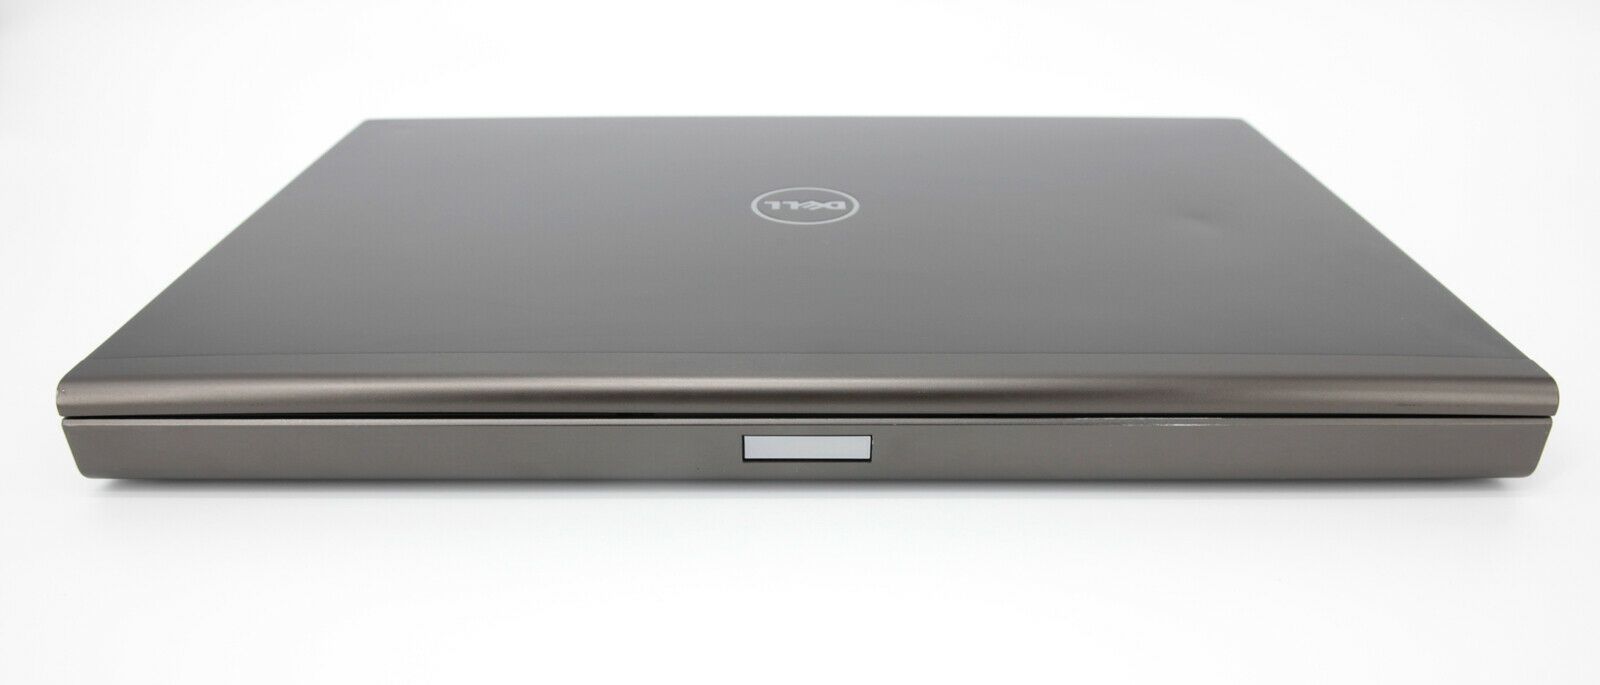 Dell Precision M6800 17" Laptop: Core i7-4600M 256GB+HDD 16GB RAM, Warranty VAT - CruiseTech